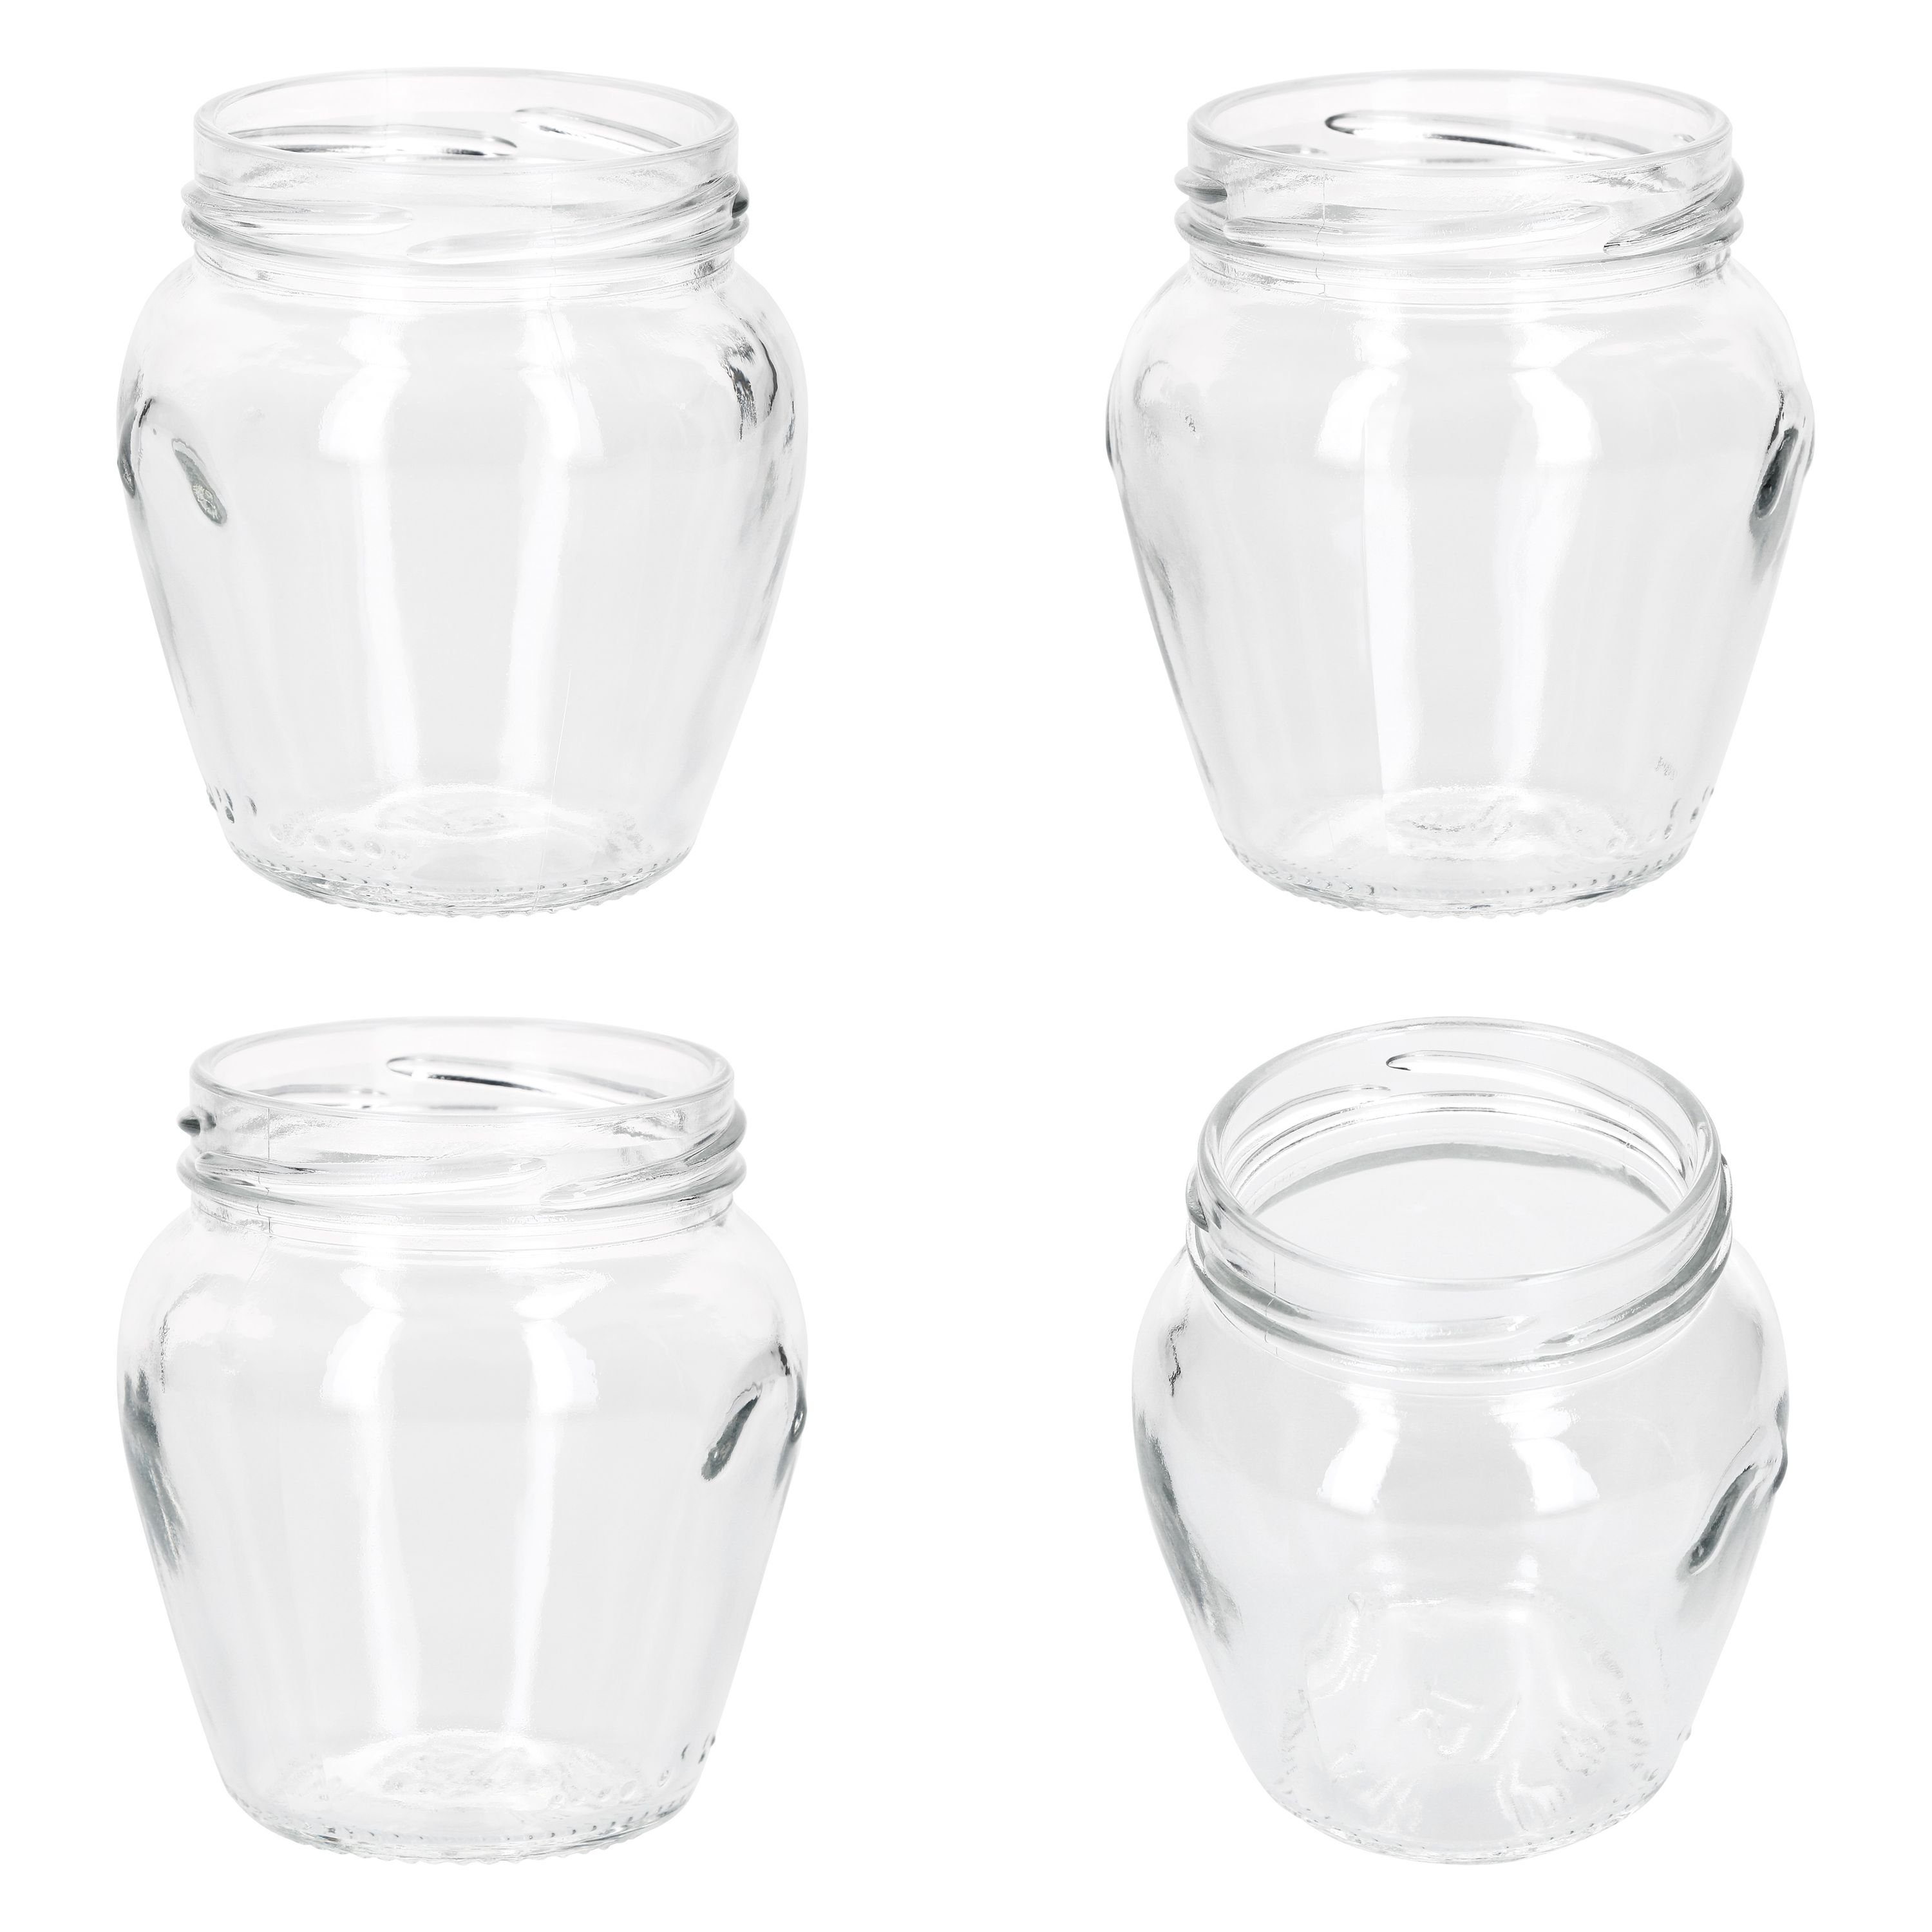 Glas Vaso 75er Einmachglas Deckel To63 Orcio Set weiß, Marmeladenglas MamboCat + 212ml